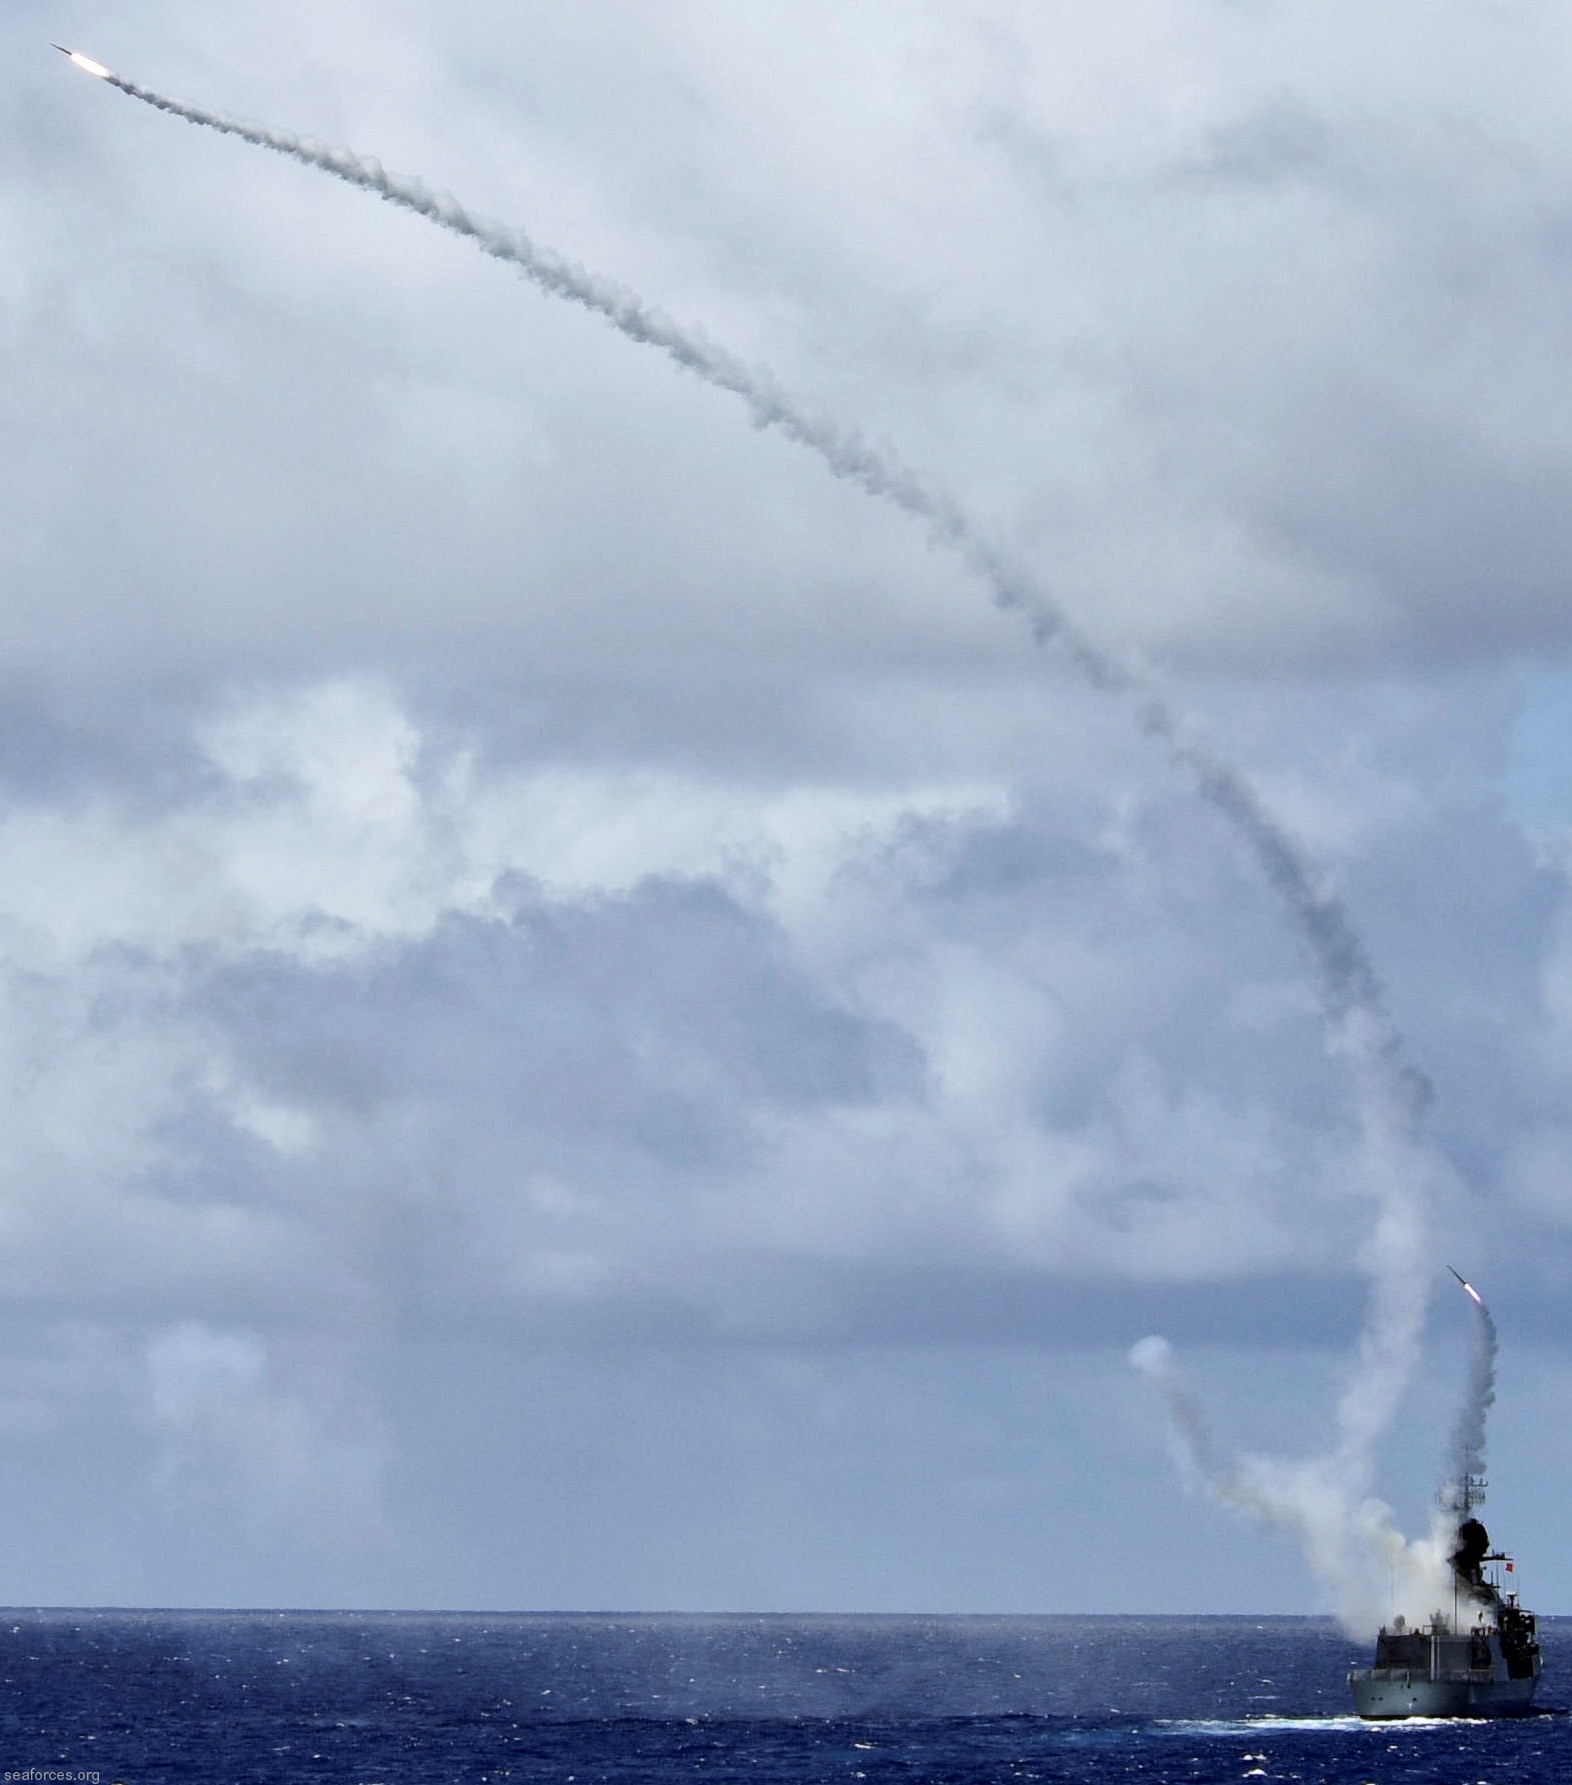 ffh-155 hms ballarat anzac class frigate rim-162 evolved sea sparrow missile essm launch mk-41 vertical launching system vls 03